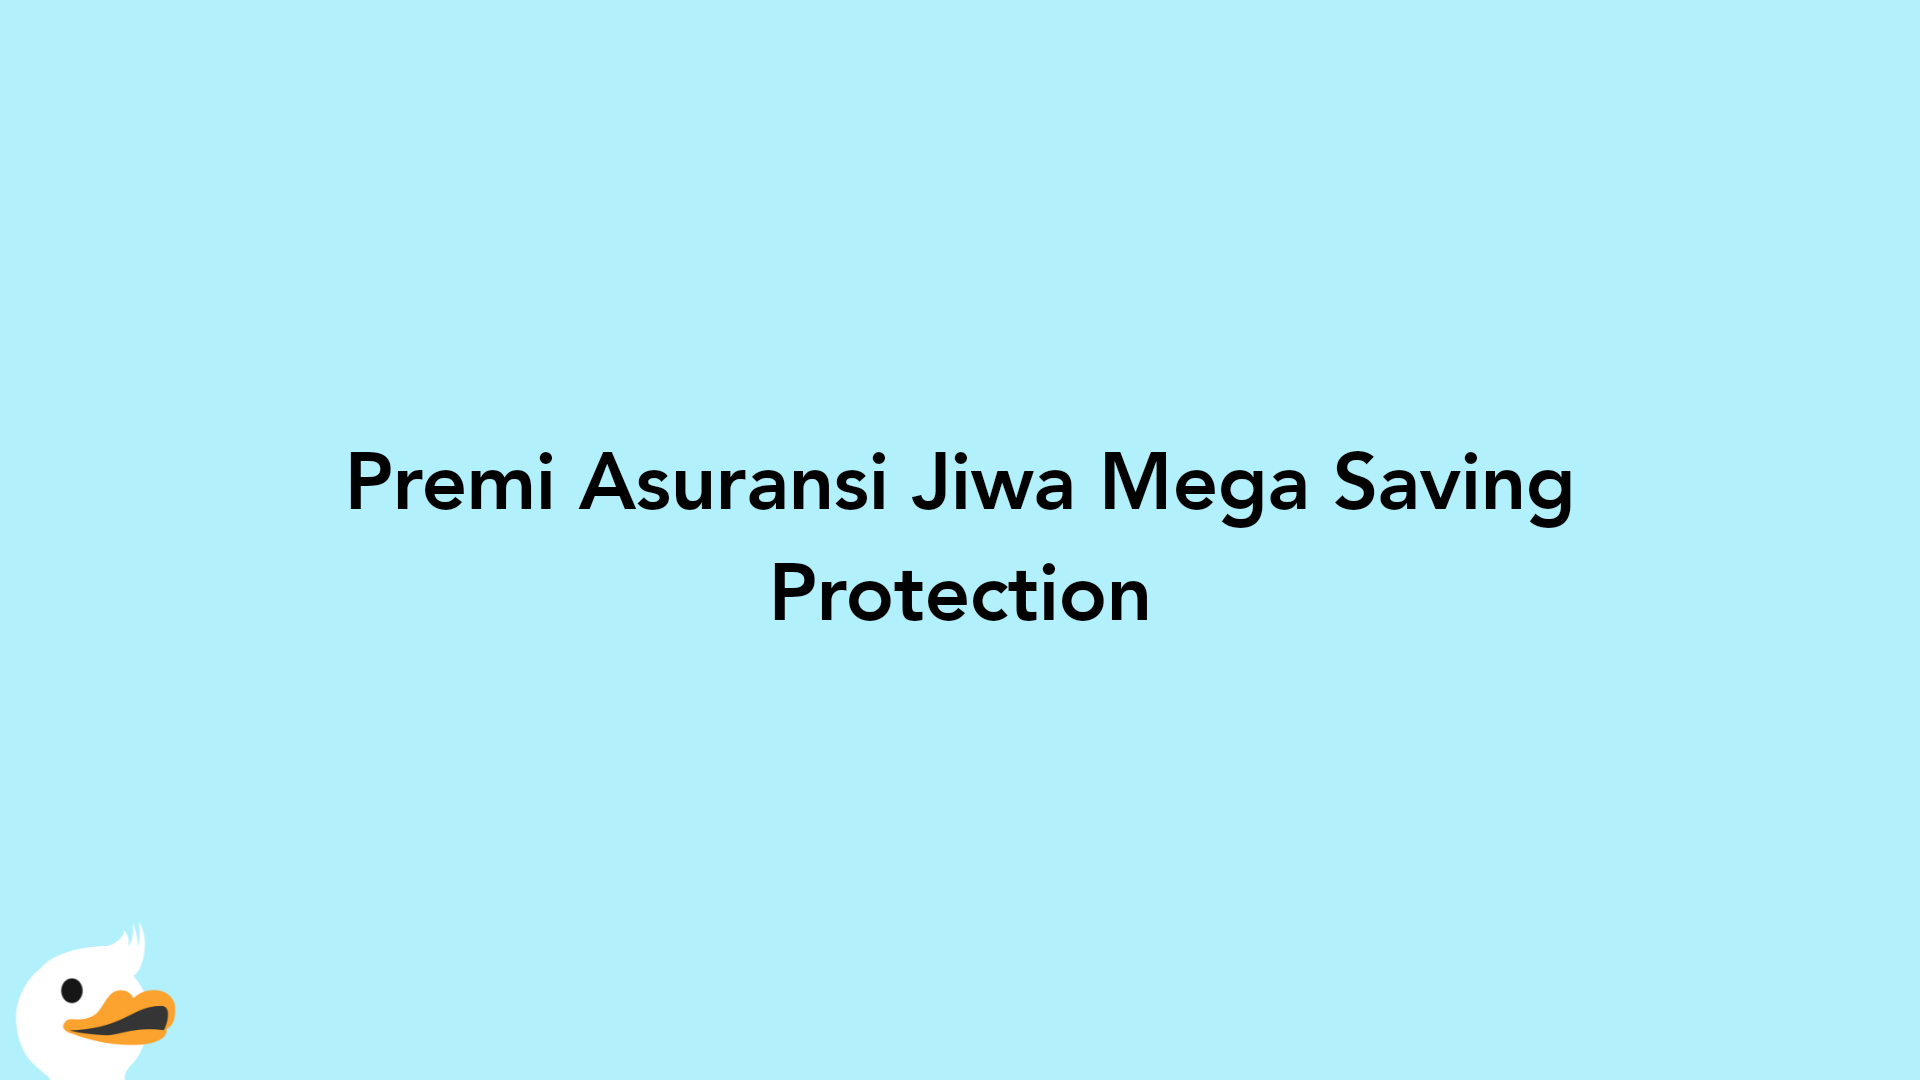 Premi Asuransi Jiwa Mega Saving Protection